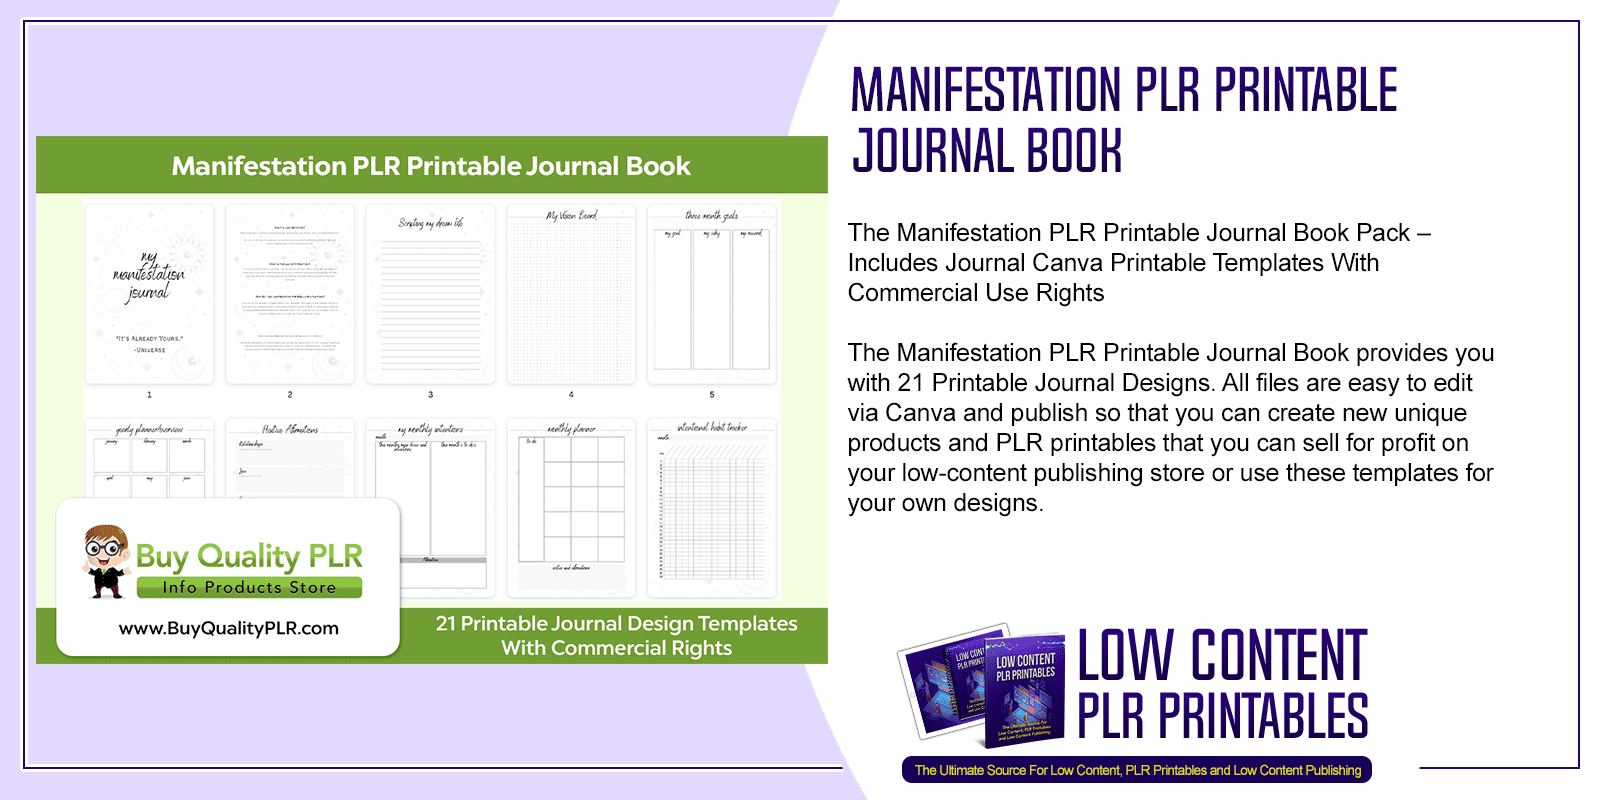 Manifestation PLR Printable Journal Book